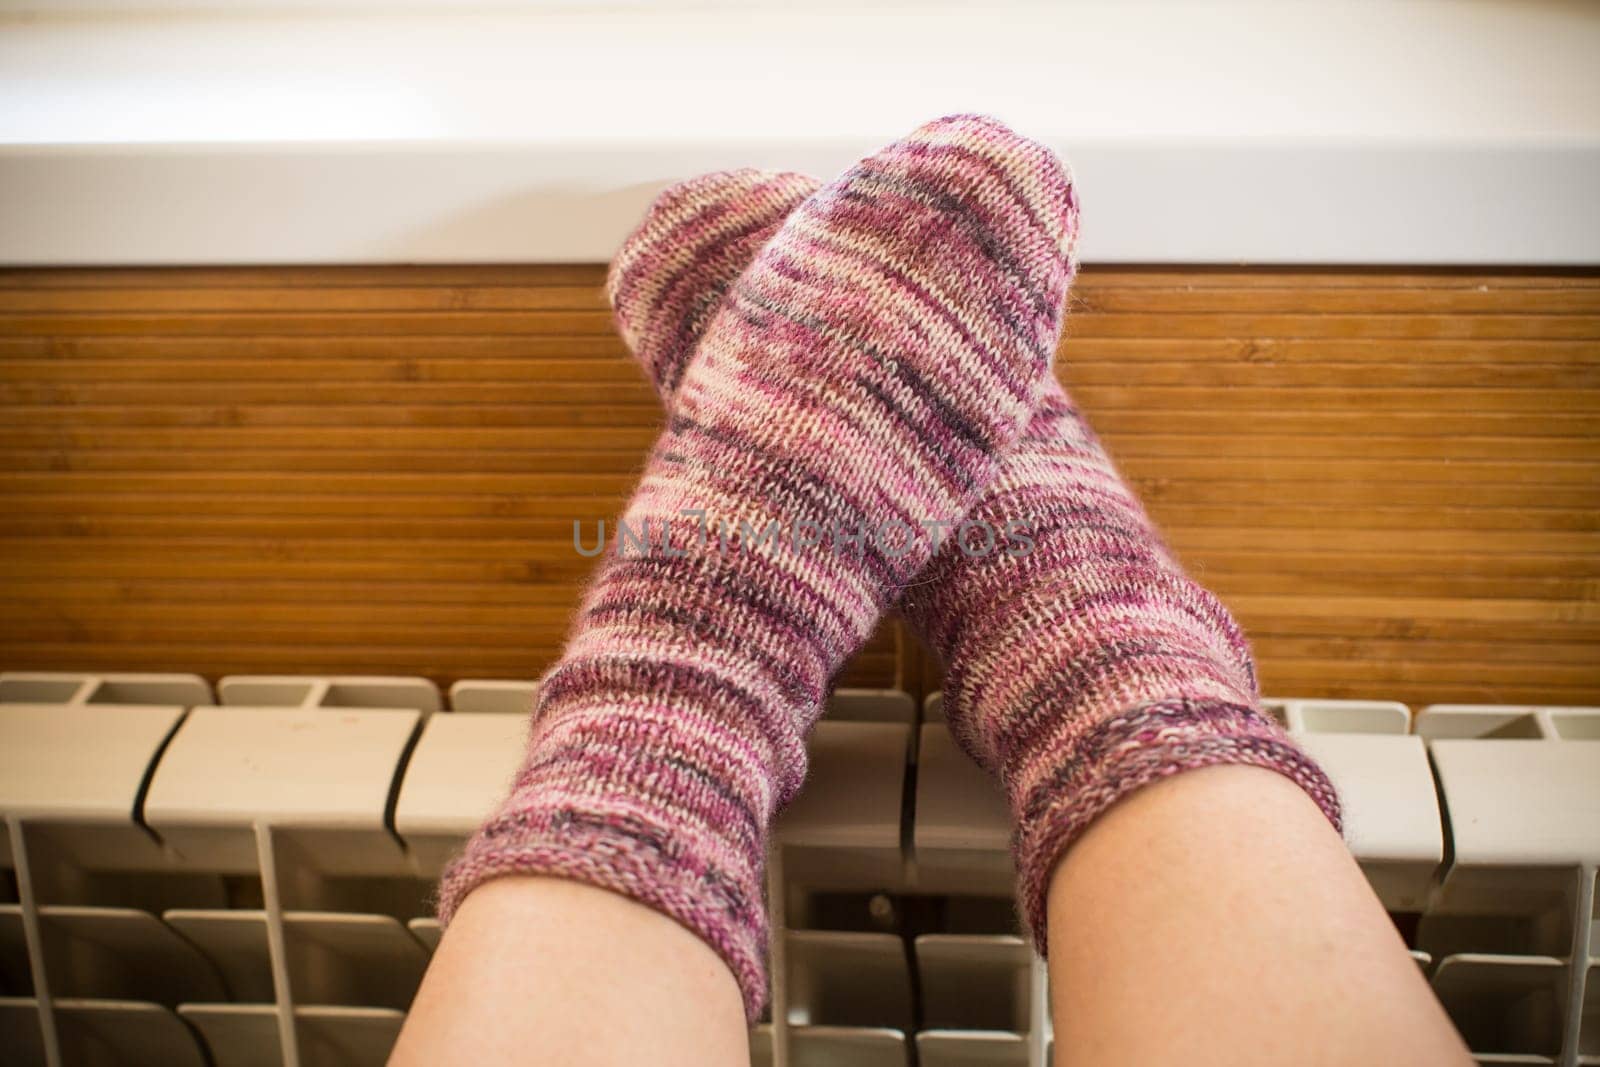 Feet in warm winter socks warm up on the radiator. by Rawlik